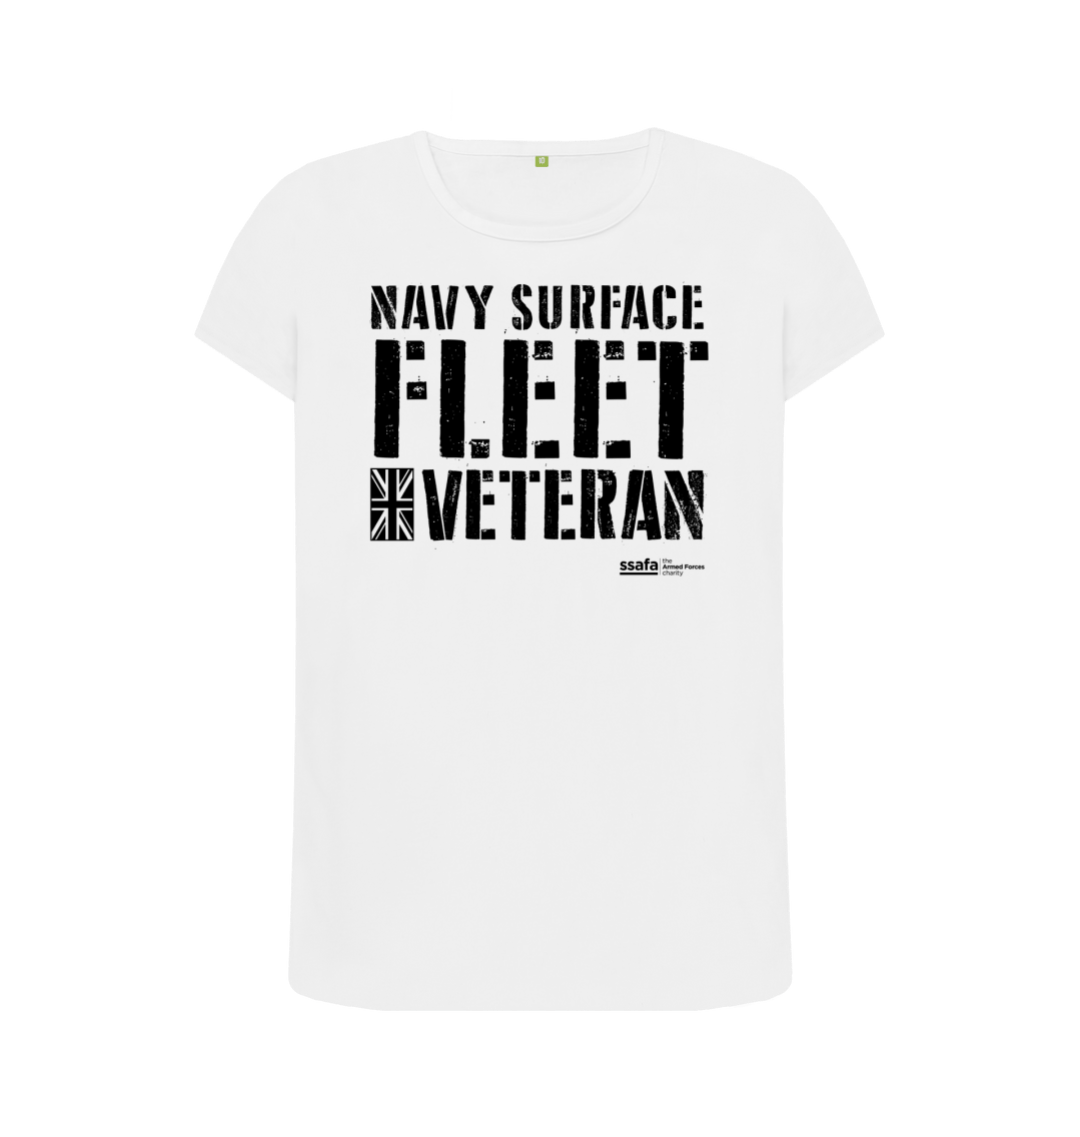 Royal Navy | SSAFA Store